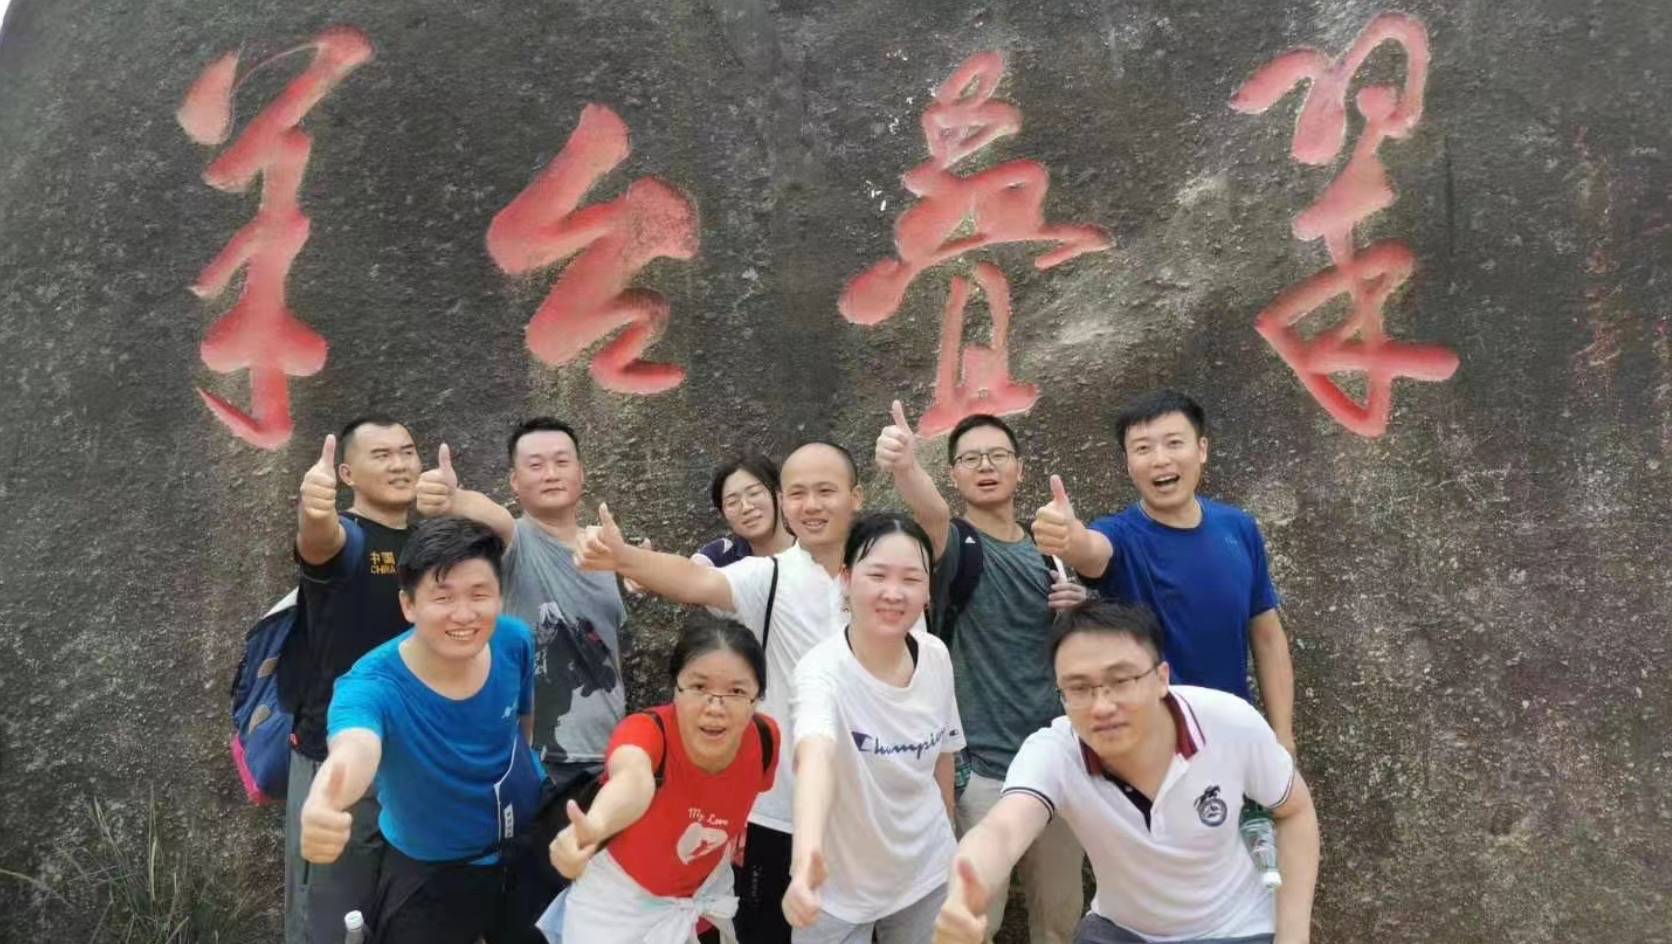 Nam Tai Property organized Golden-Autumn Corporate Team Building Activity